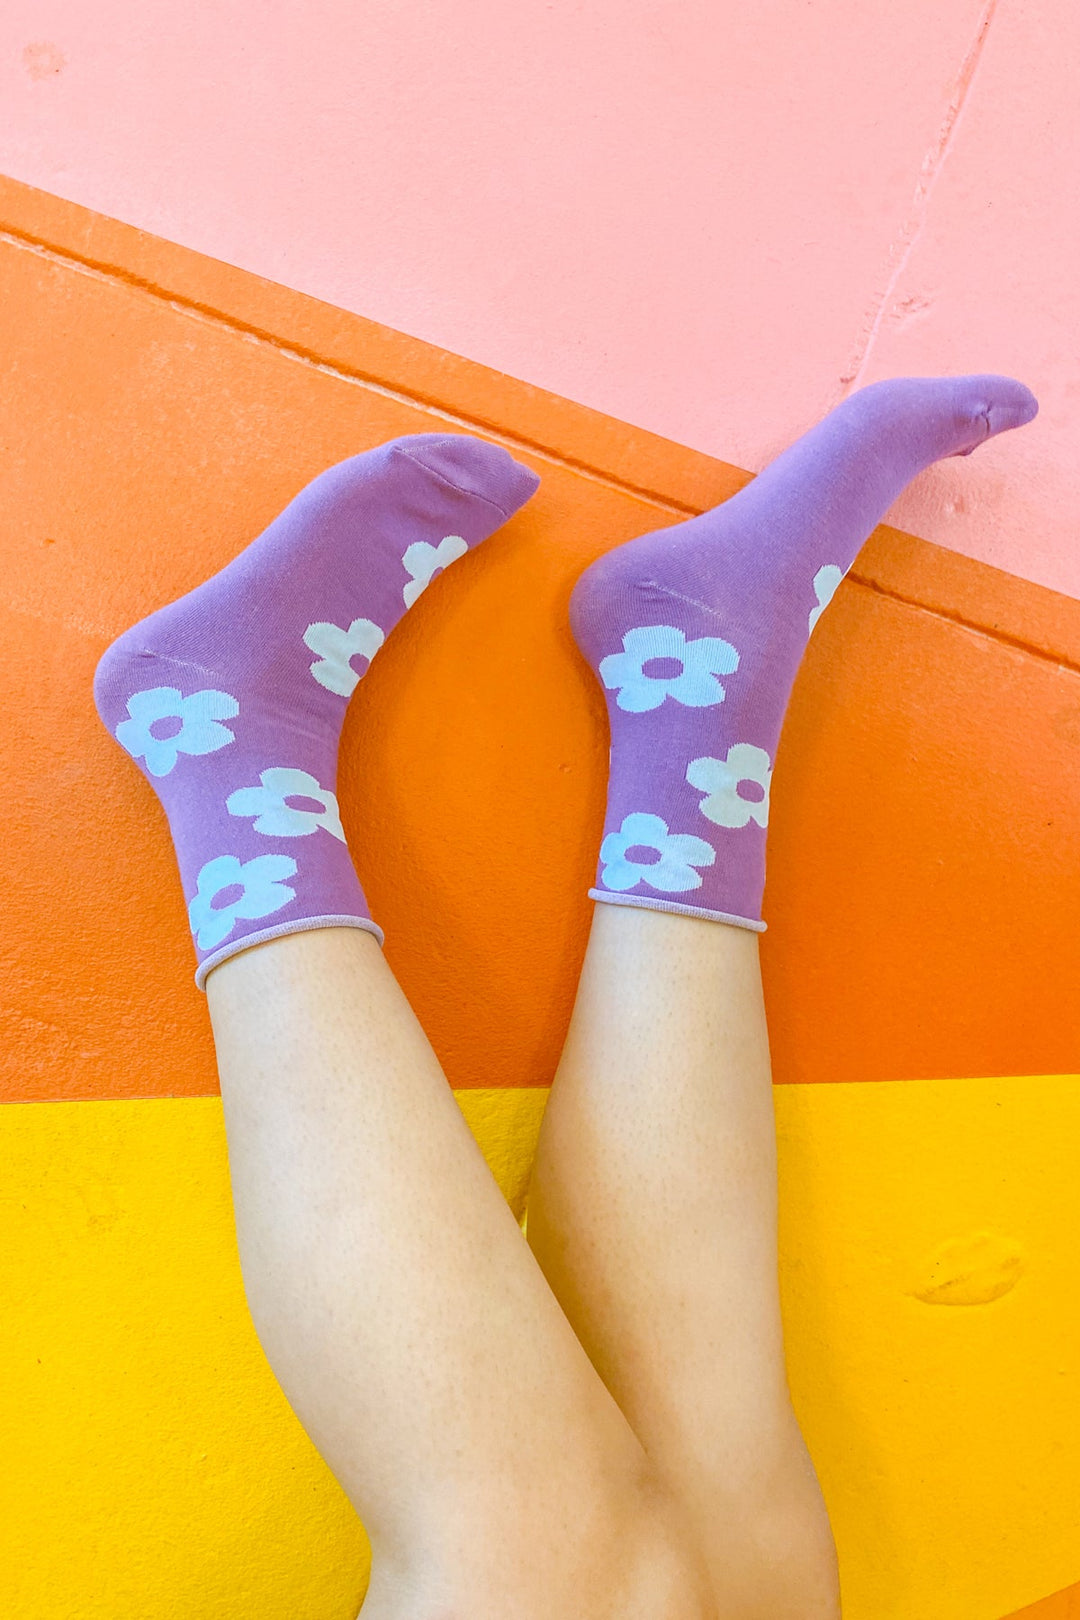 Softie Socks in Lilac